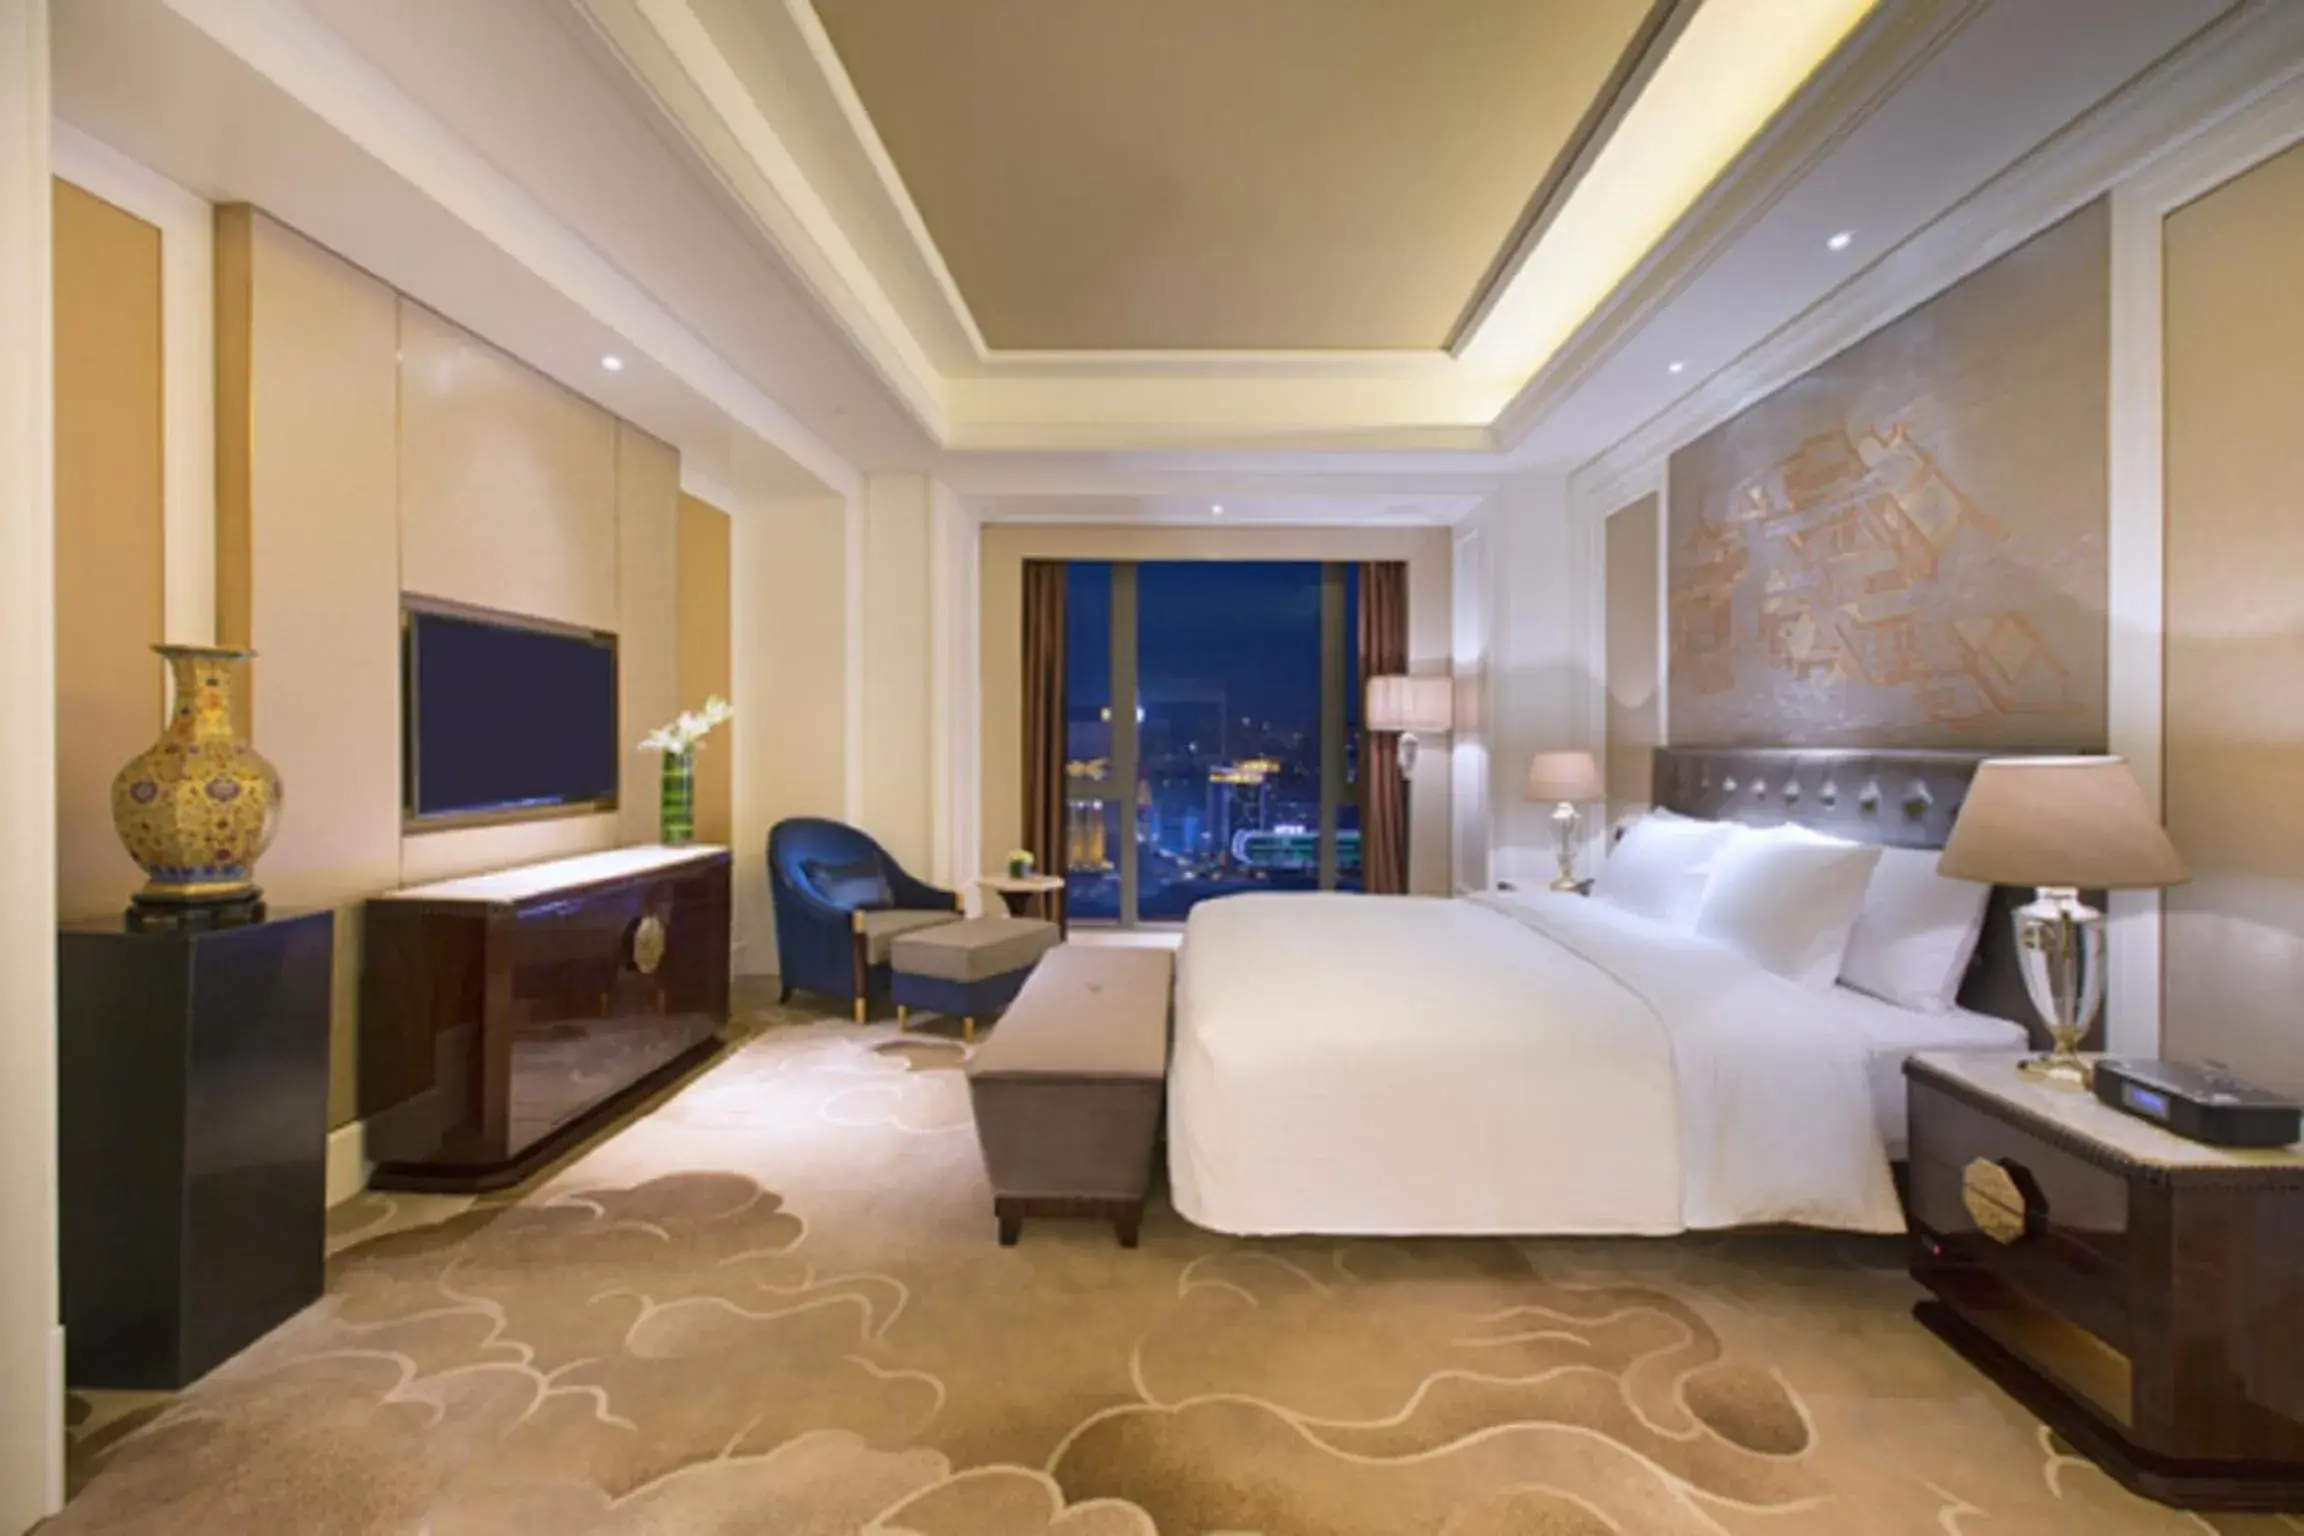 Bedroom in Wanda Vista Shenyang